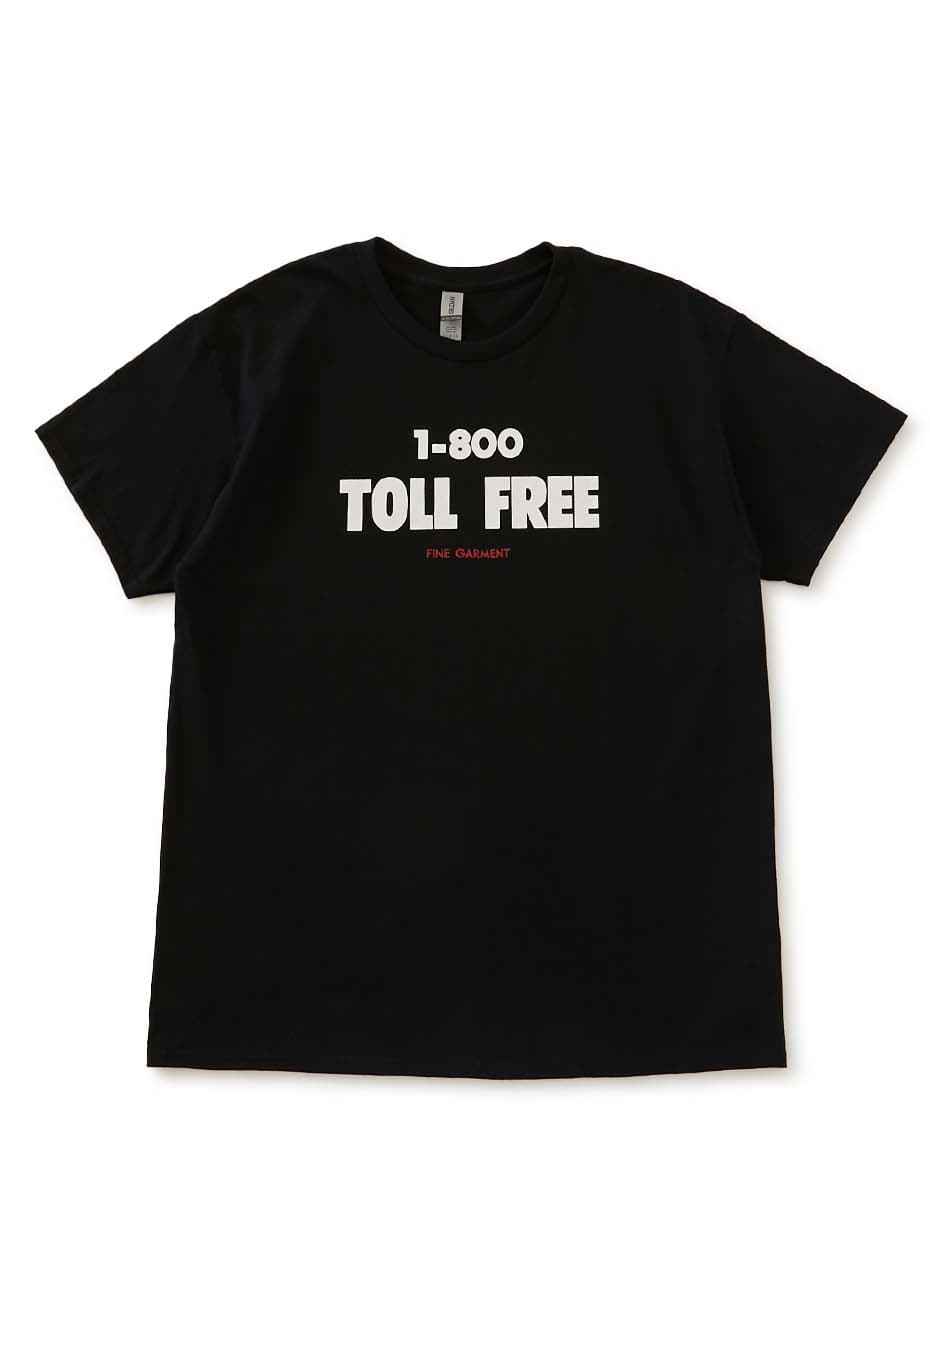 TOLL FREE /1-800 TOLL FREE ショートスリーブ プリント Tシャツ